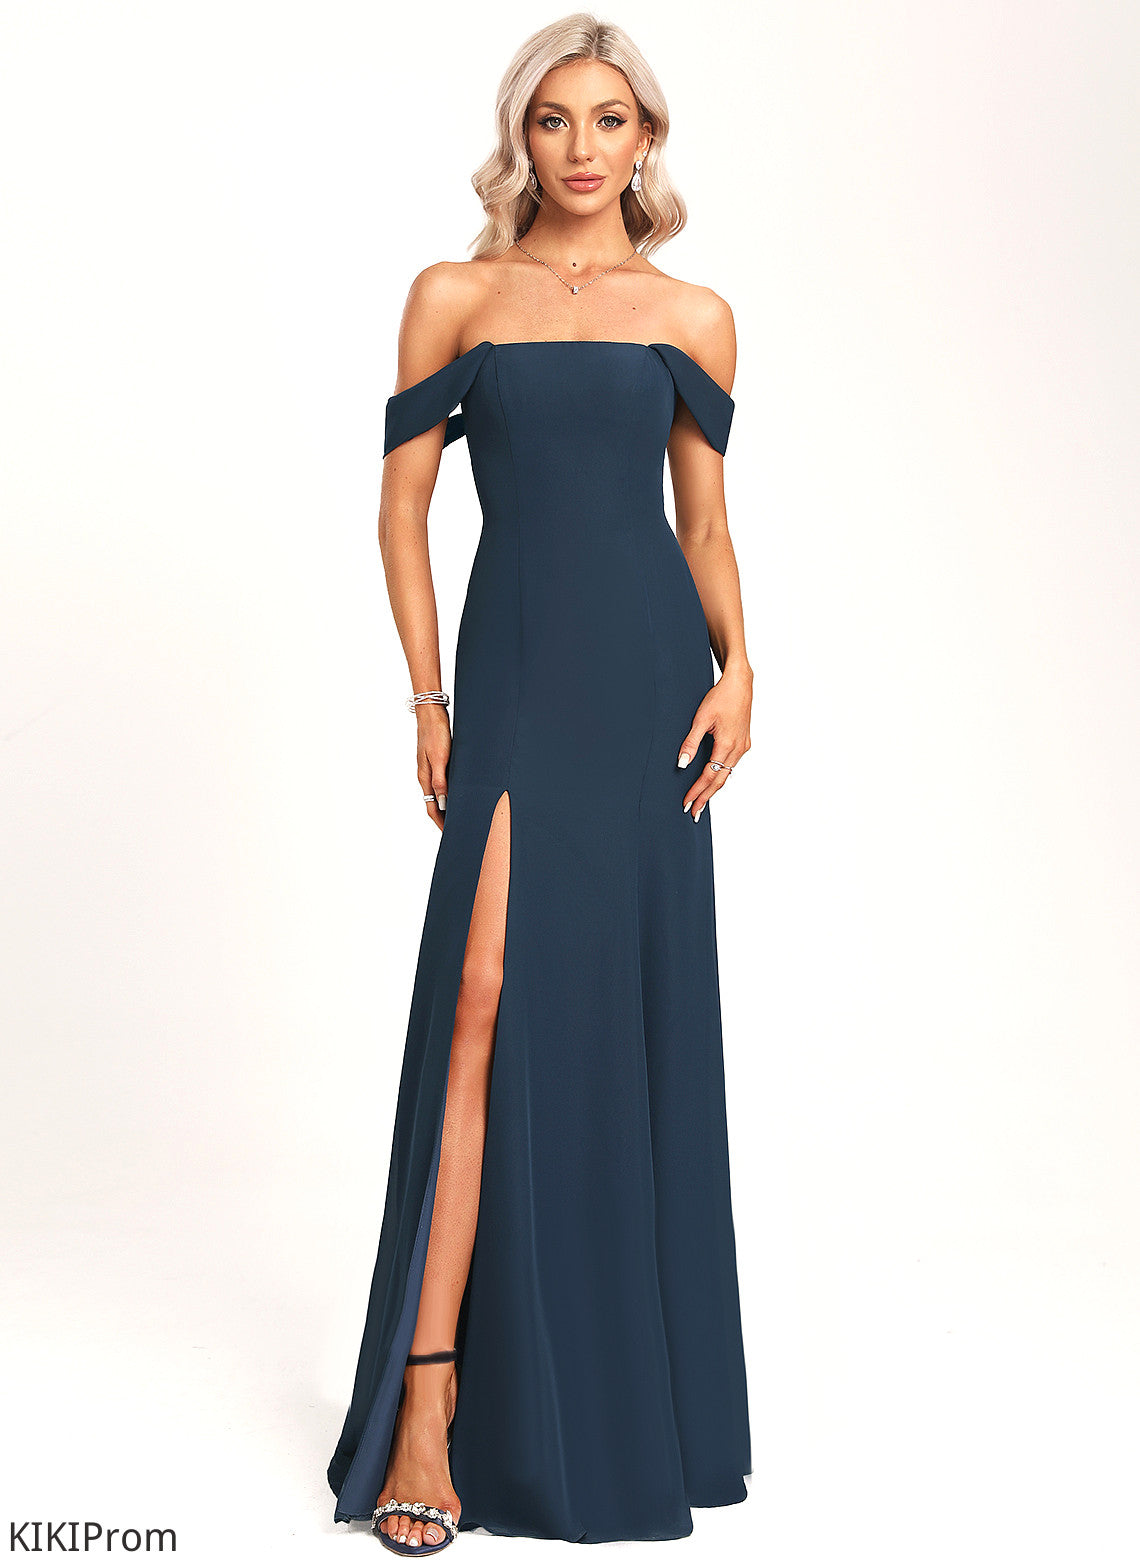 Silhouette Neckline Fabric Off-the-Shoulder Straps&Sleeves Length Trumpet/Mermaid Floor-Length Celia Bridesmaid Dresses